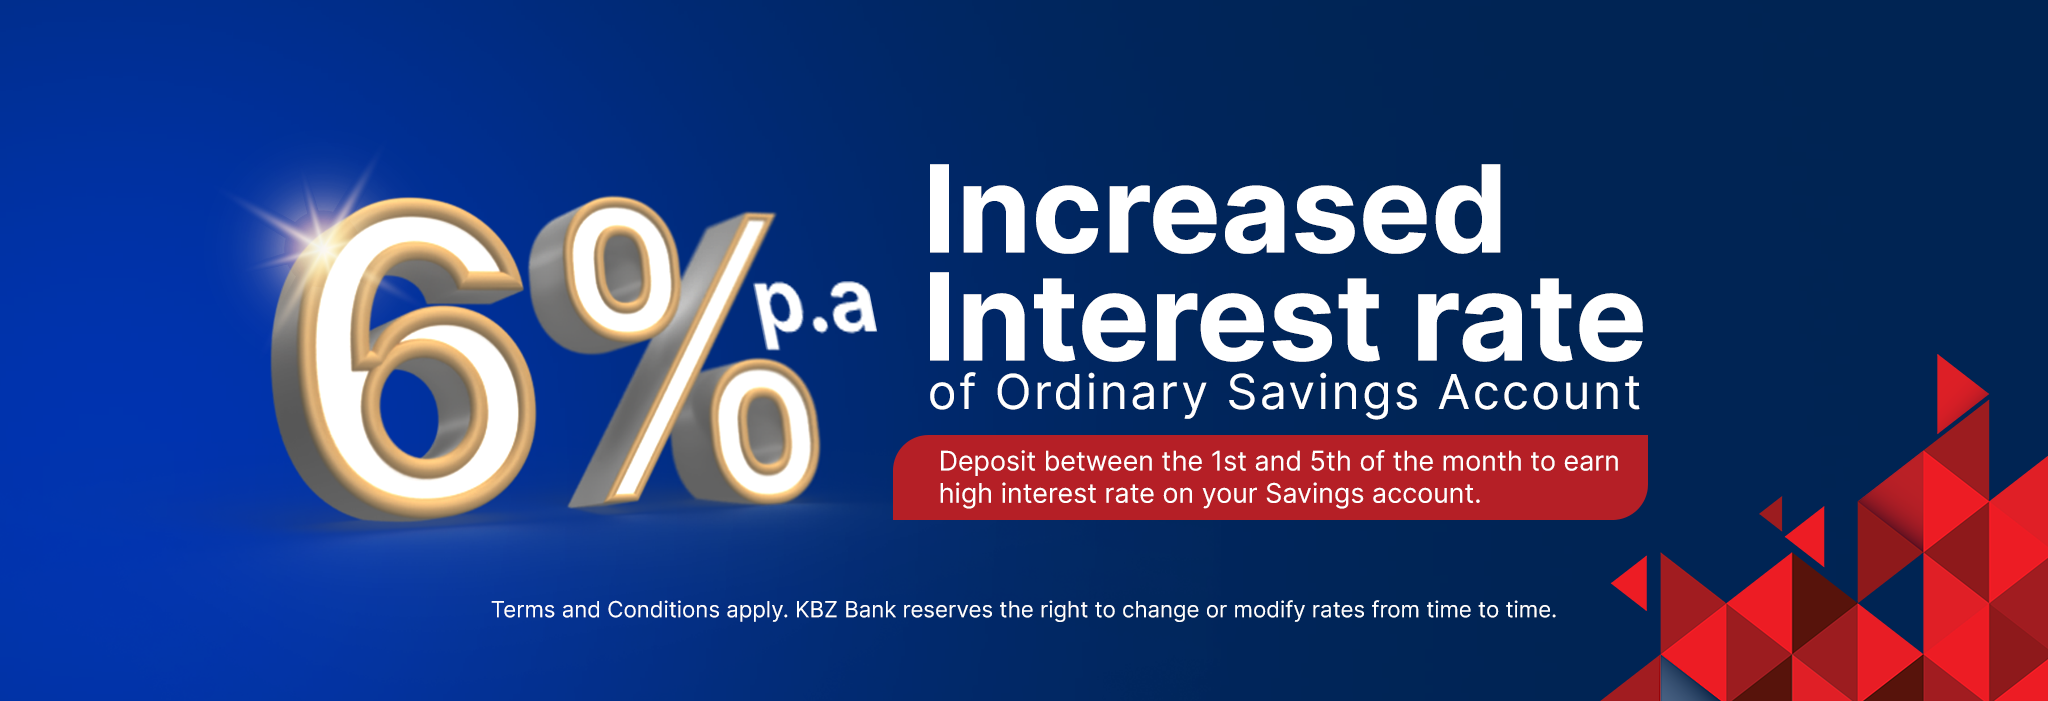 Increased Interest Rate of Ordinary Savings Deposit Account